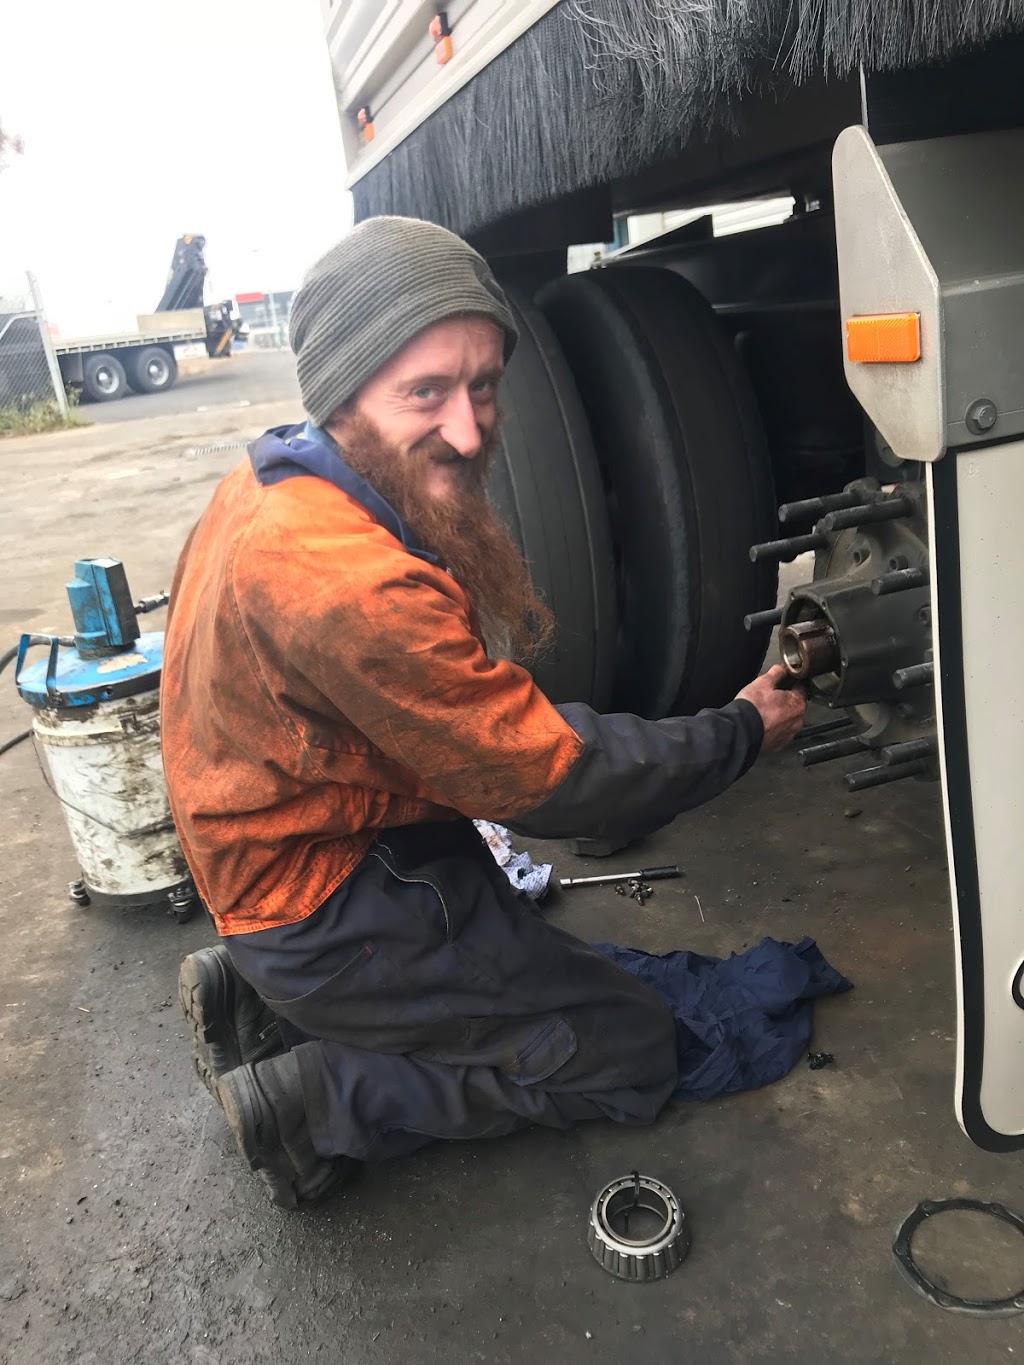 Maude Diesel Service | car repair | 4/12 Morgan St, North Geelong VIC 3215, Australia | 0352782900 OR +61 3 5278 2900